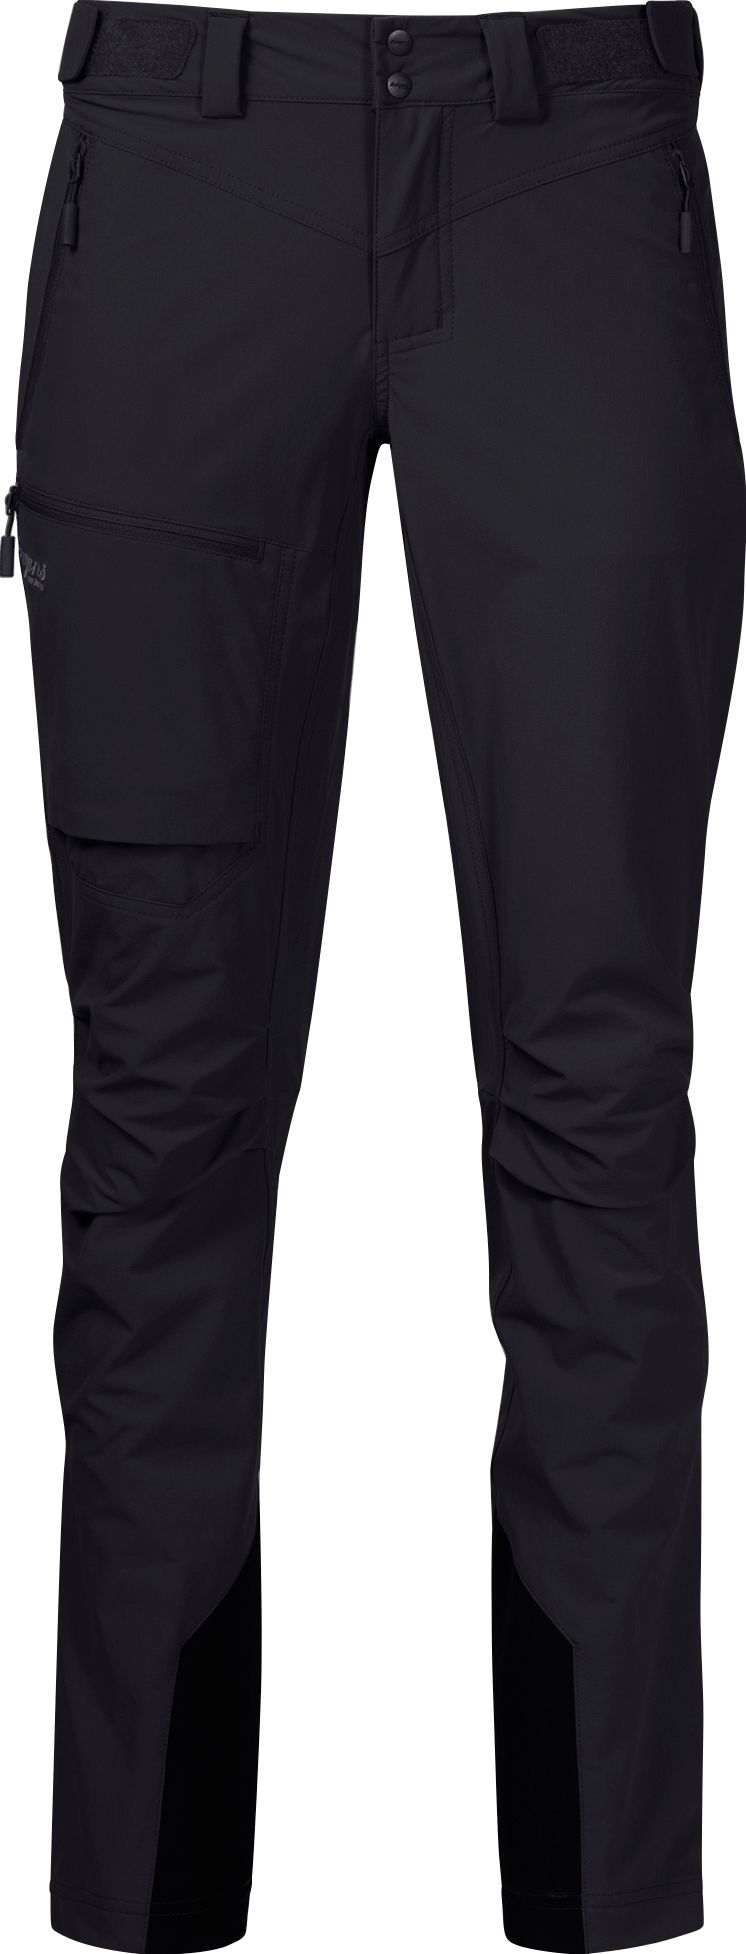 Women's Breheimen Softshell Pants Black/Solid Charcoal